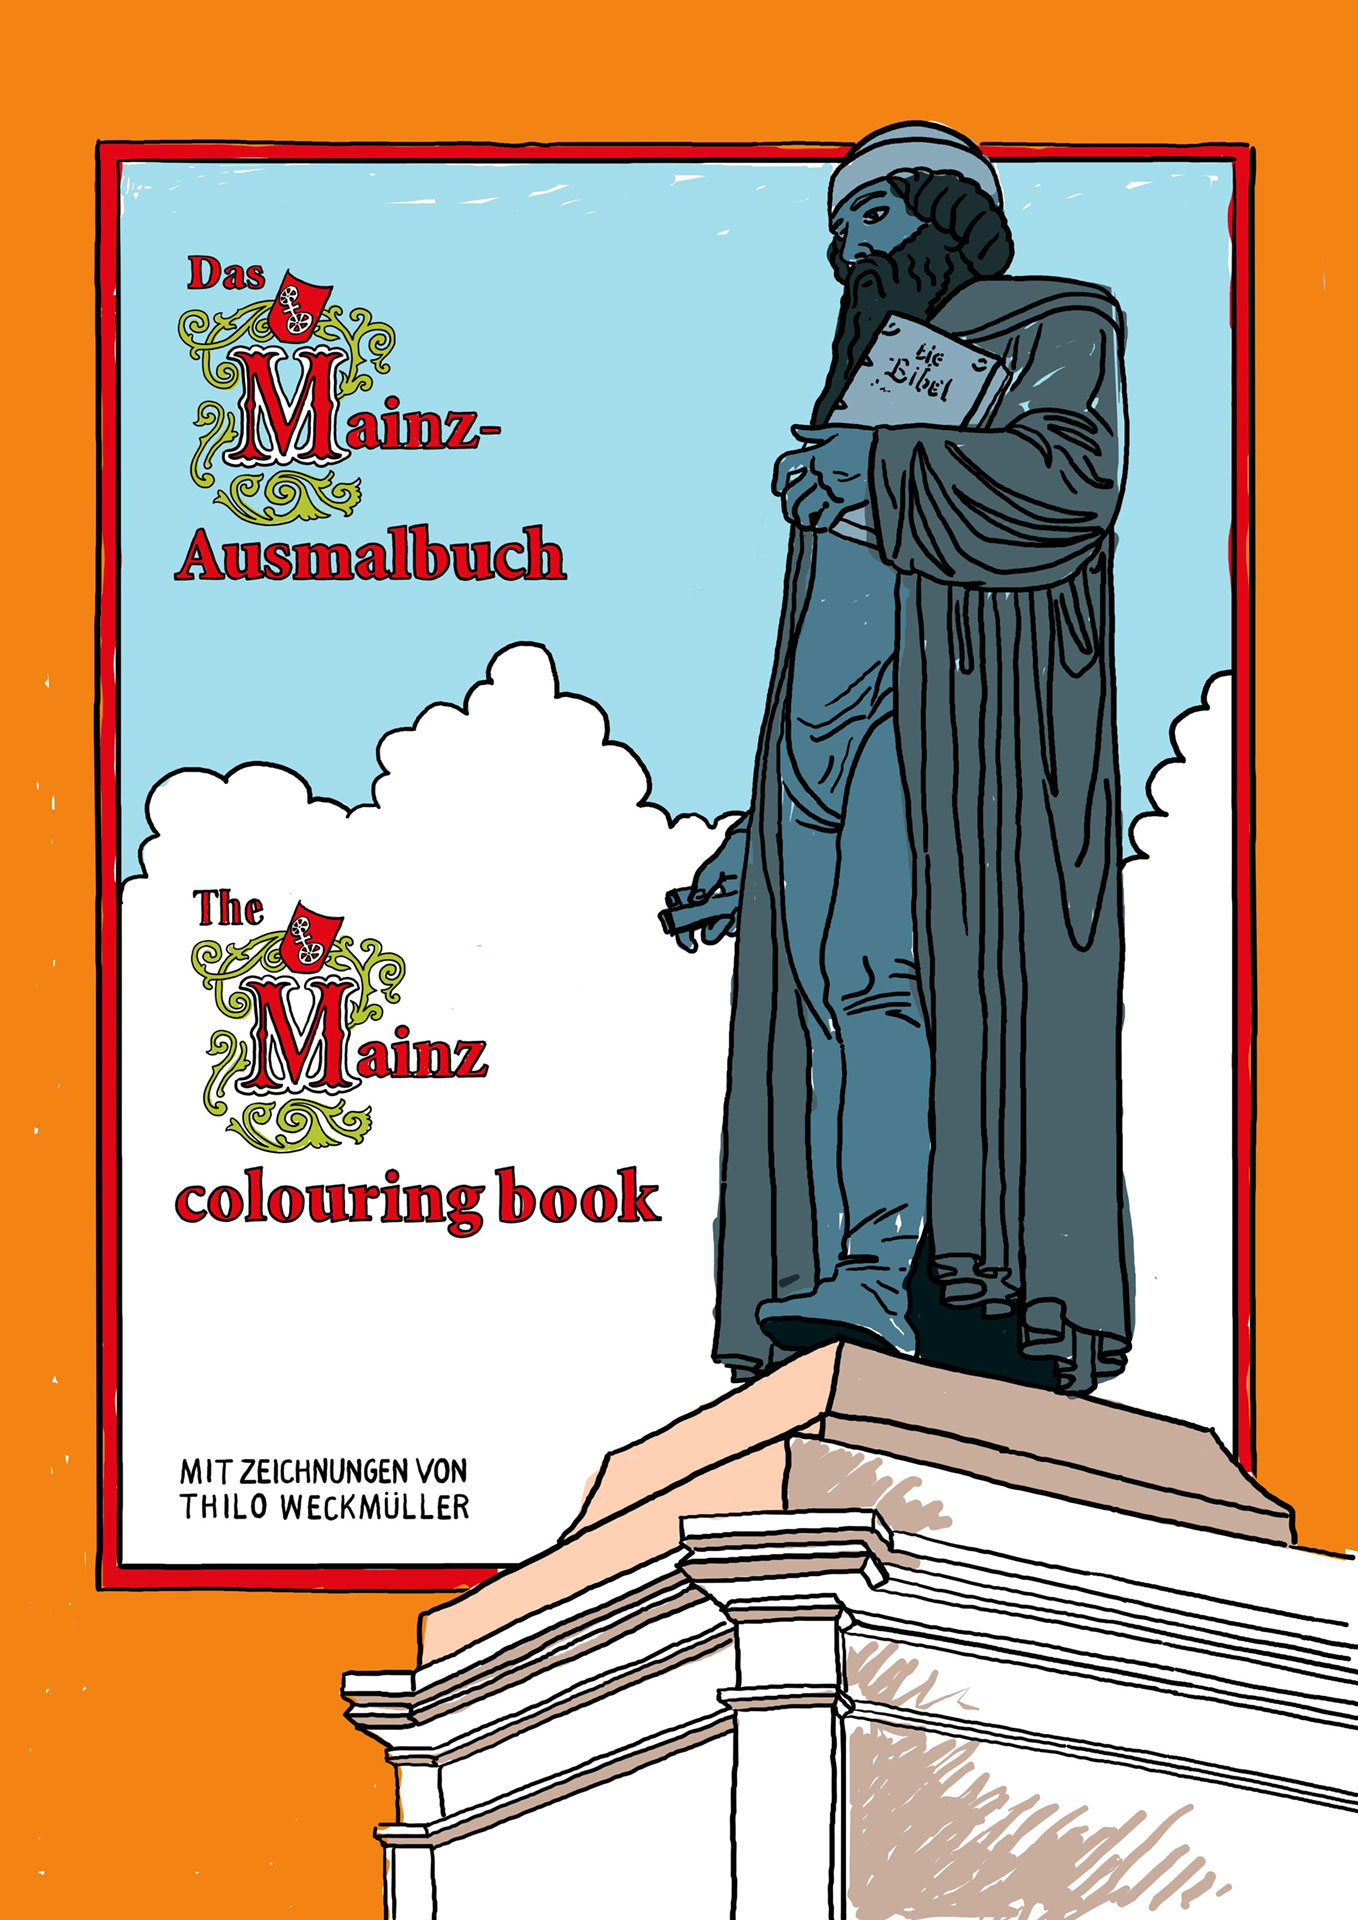 The Mainz colouring book / Das Mainz-Ausmalbuch